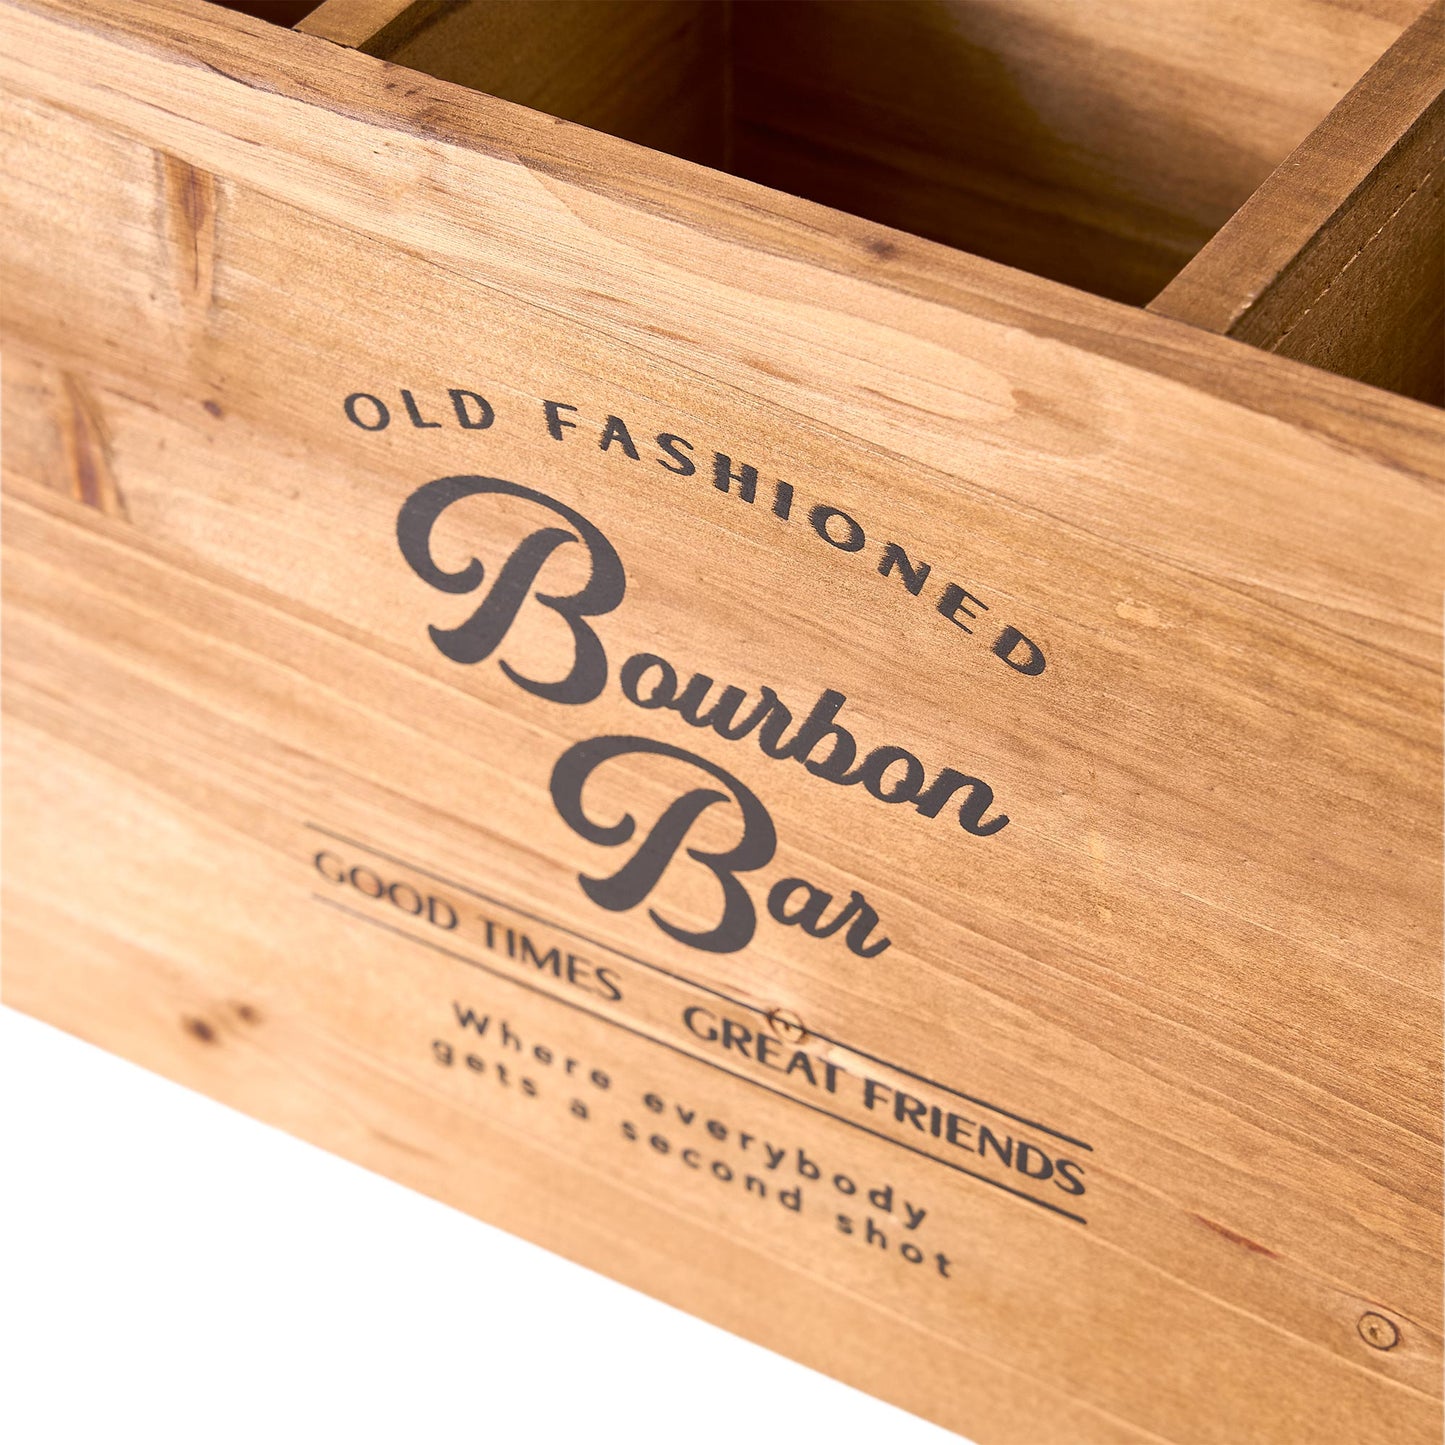 The Bourbon Bar Wood Crate Bottle Holder with Metal Handles - 7" H x 14" L x 8" D